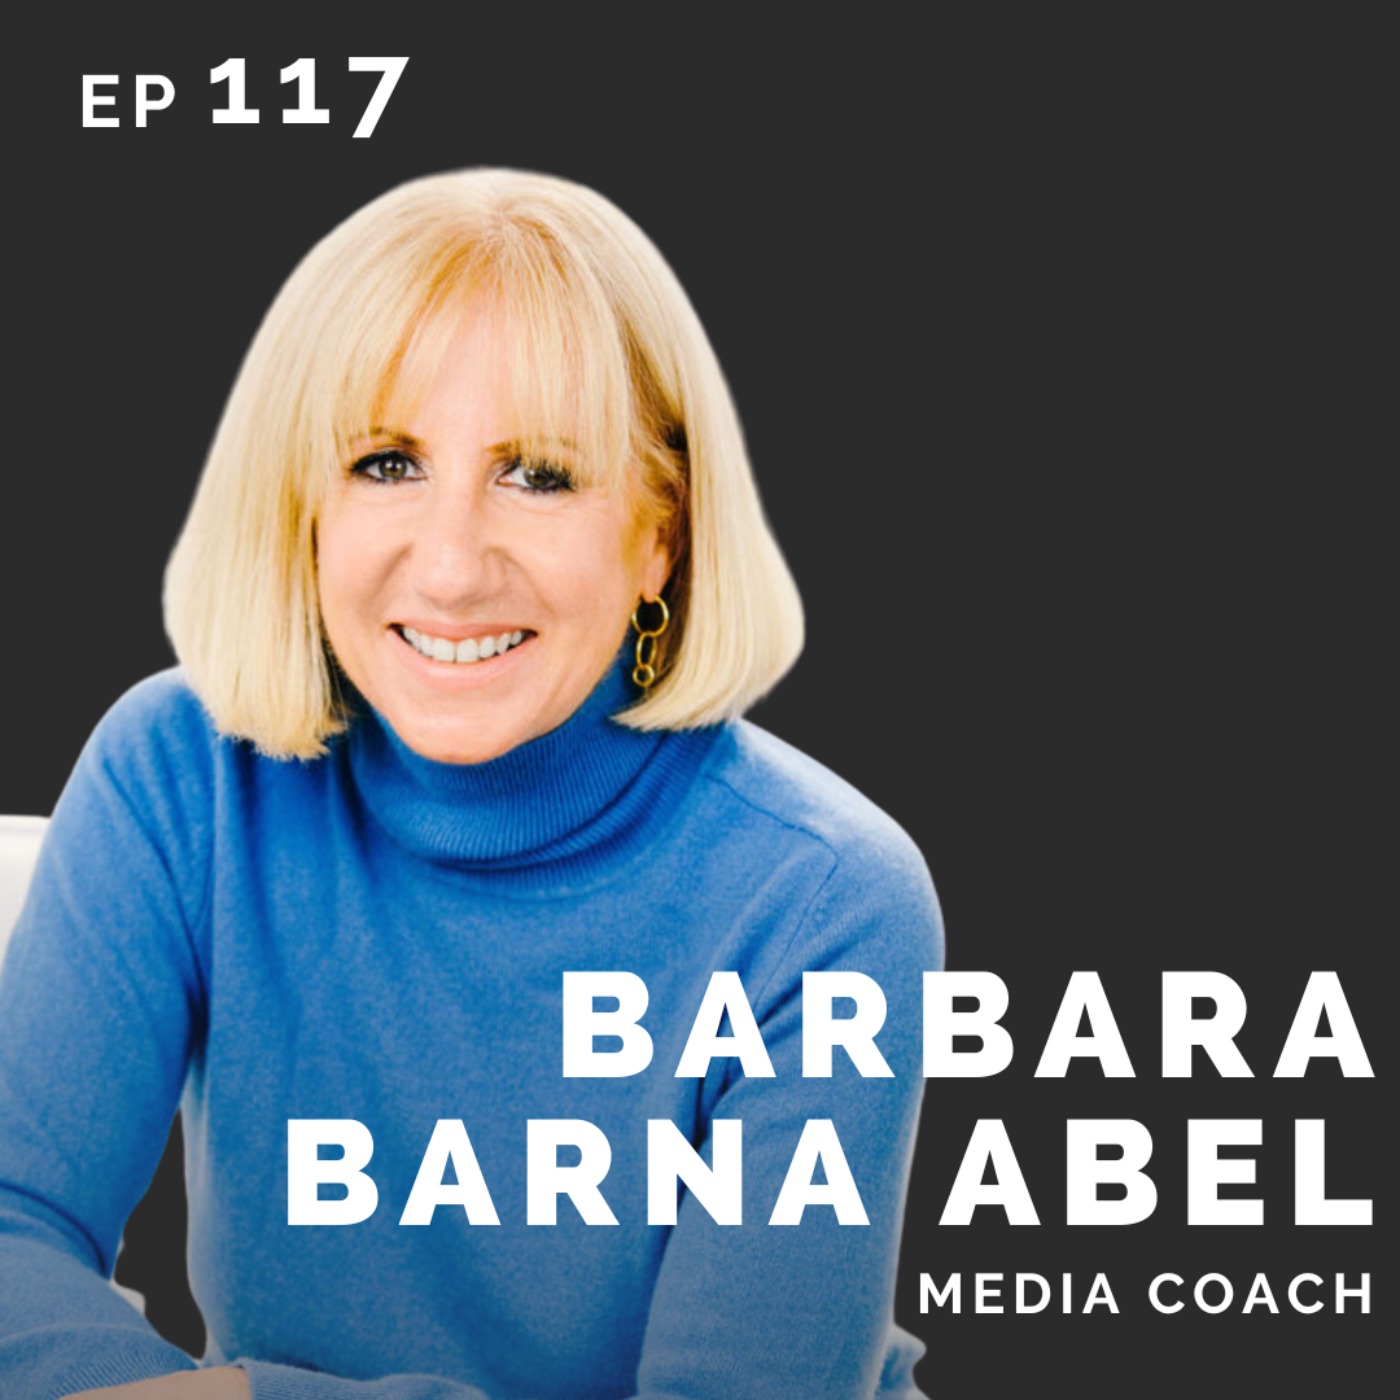 EP 117: Barbara Barna Abel: Media Coach